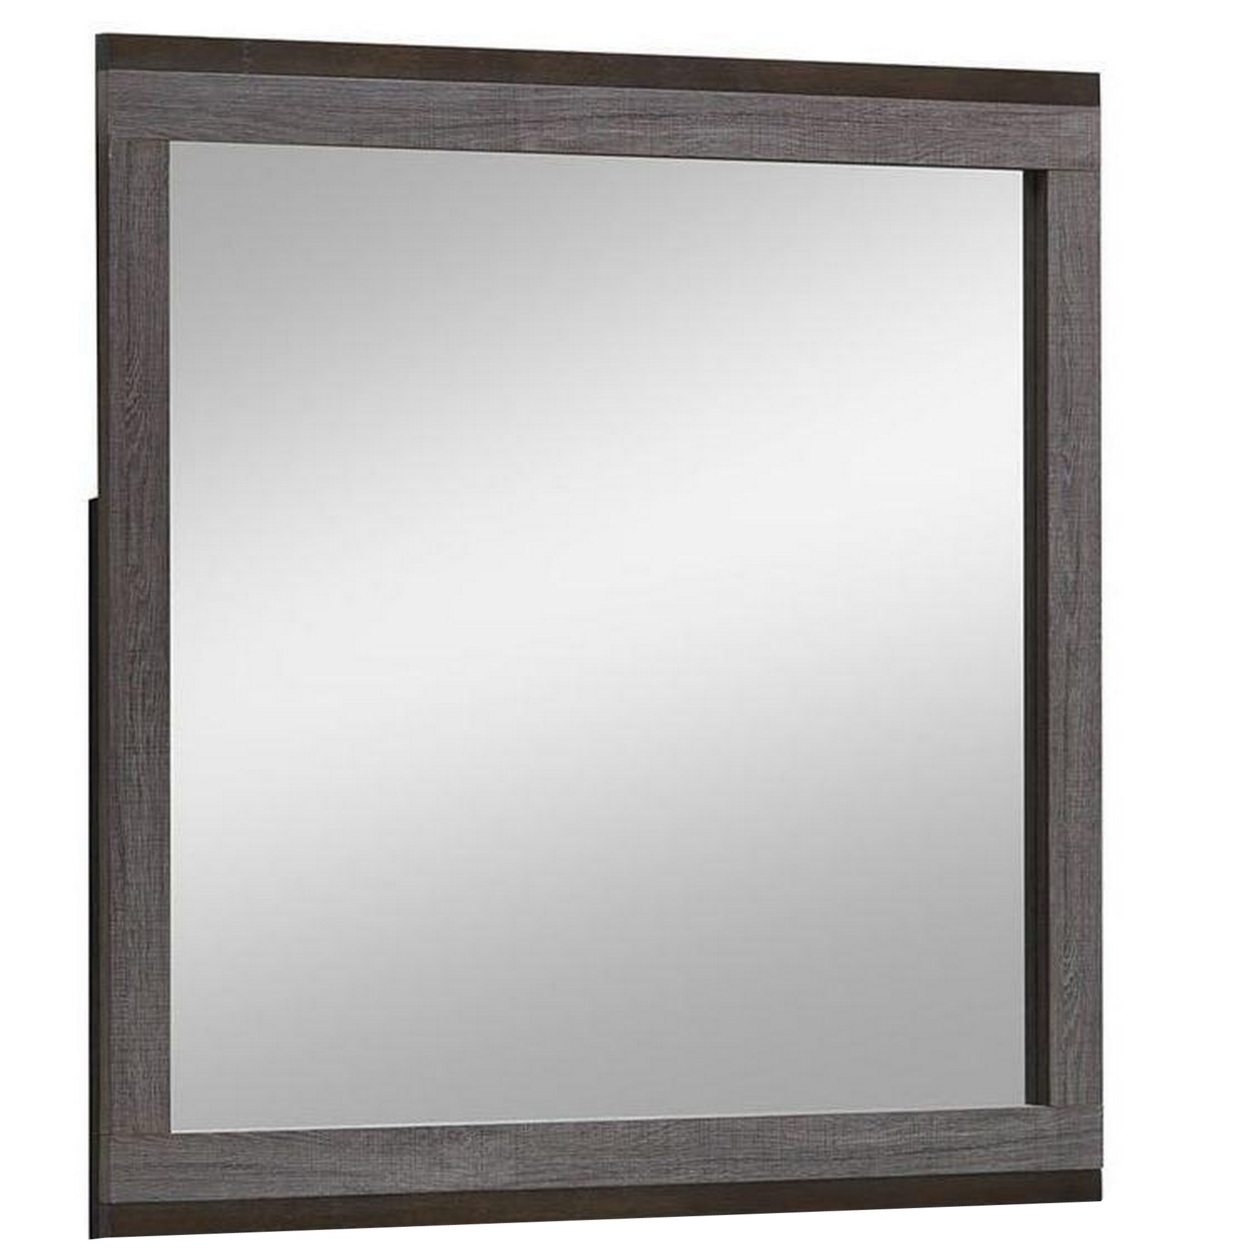 Manvel Contemporary Mirror, Two Tone Antique Gray- Saltoro Sherpi